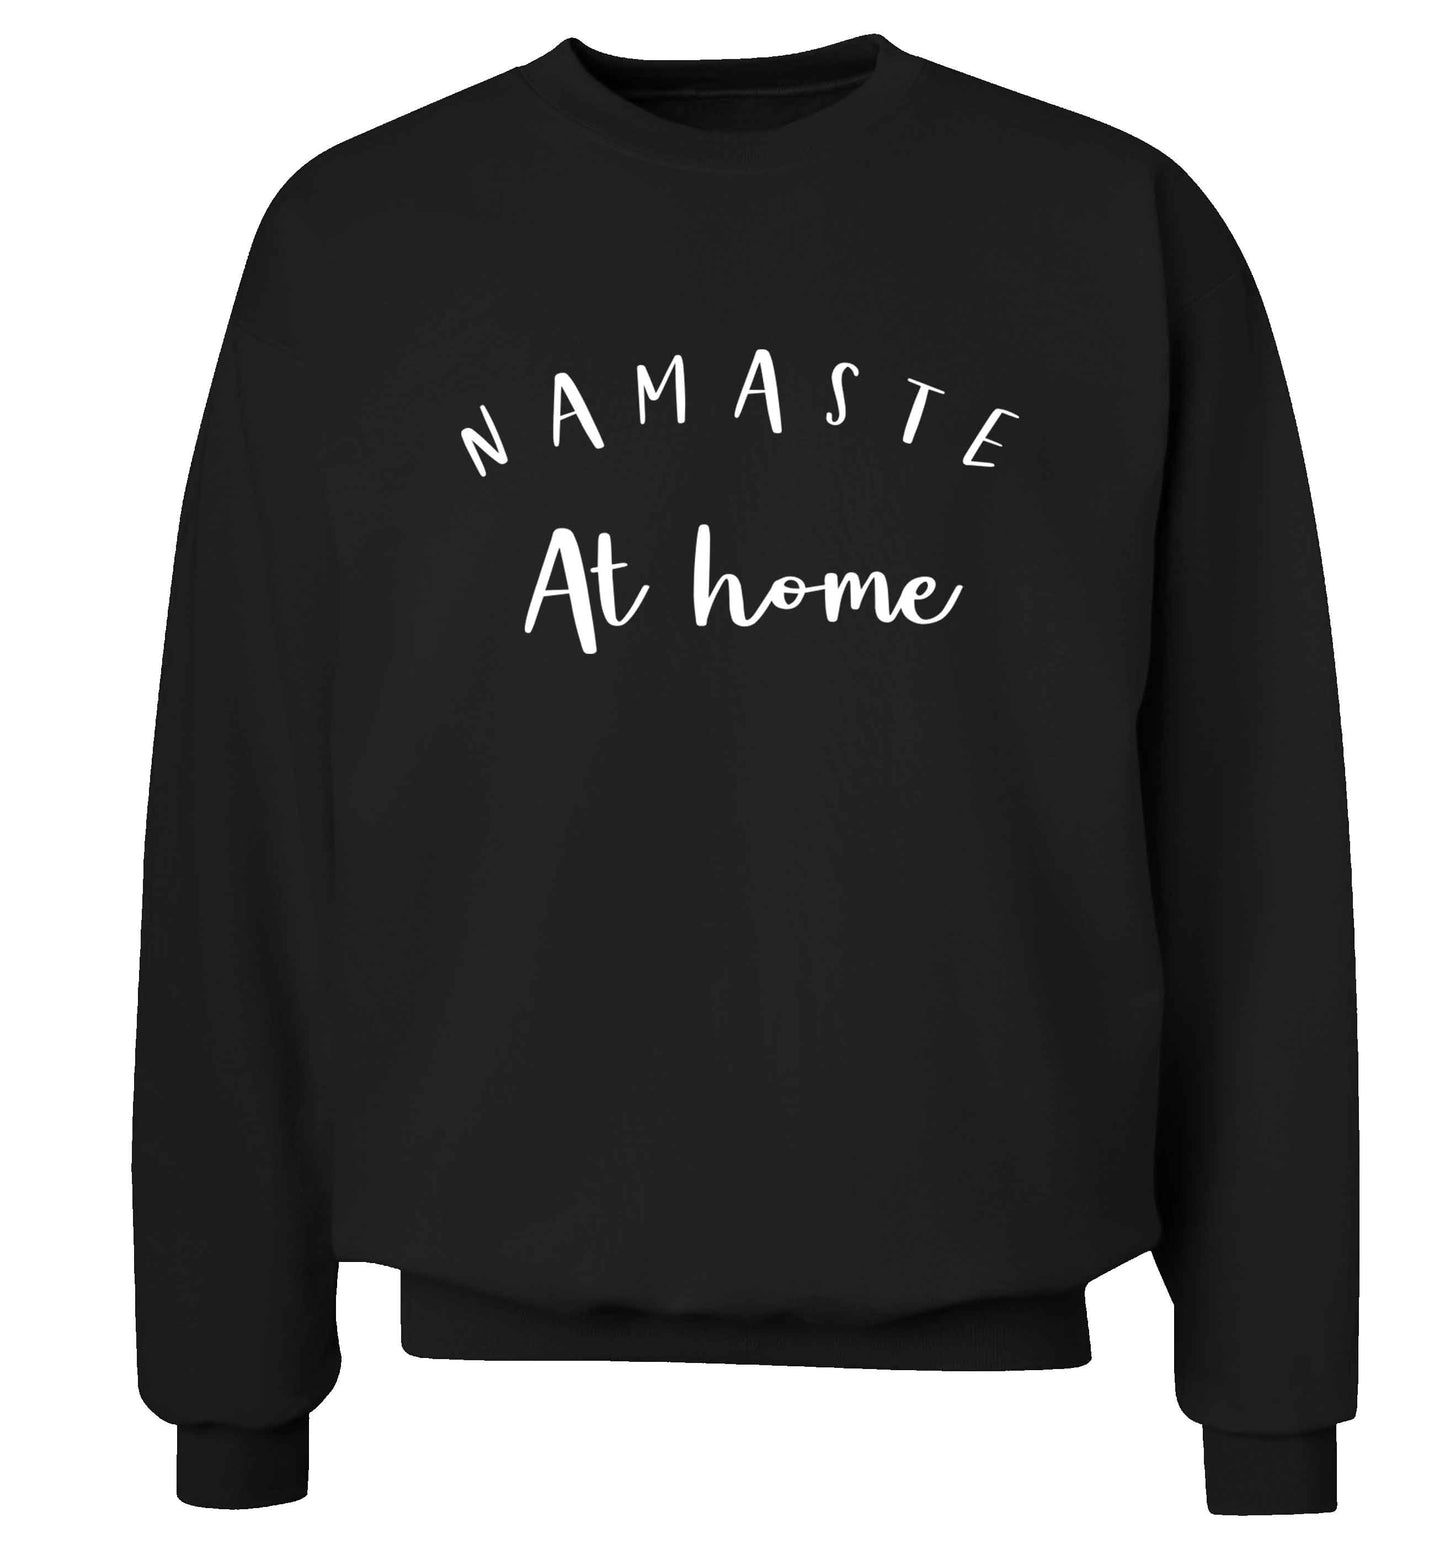 Namaste at home Adult's unisex black Sweater 2XL